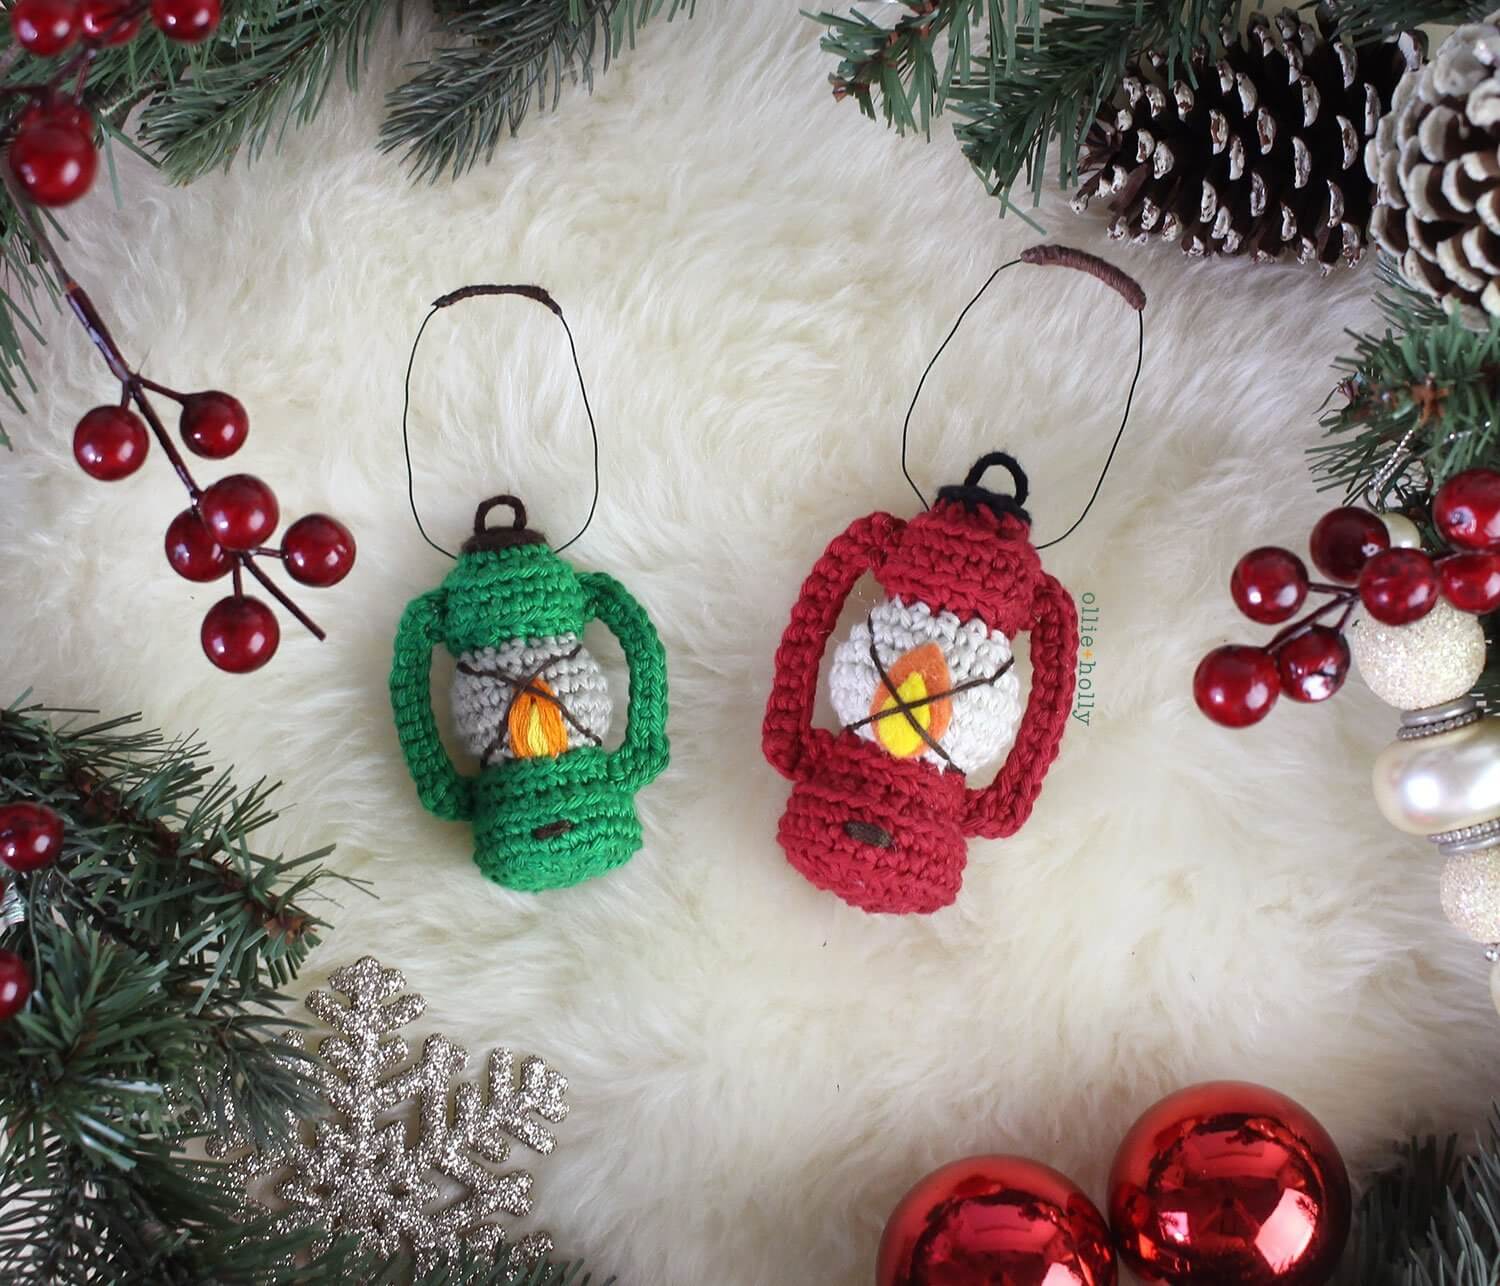 Camping Lantern Amigurumi Craft Made Using Crochet Crochet Christmas Ornament Patterns